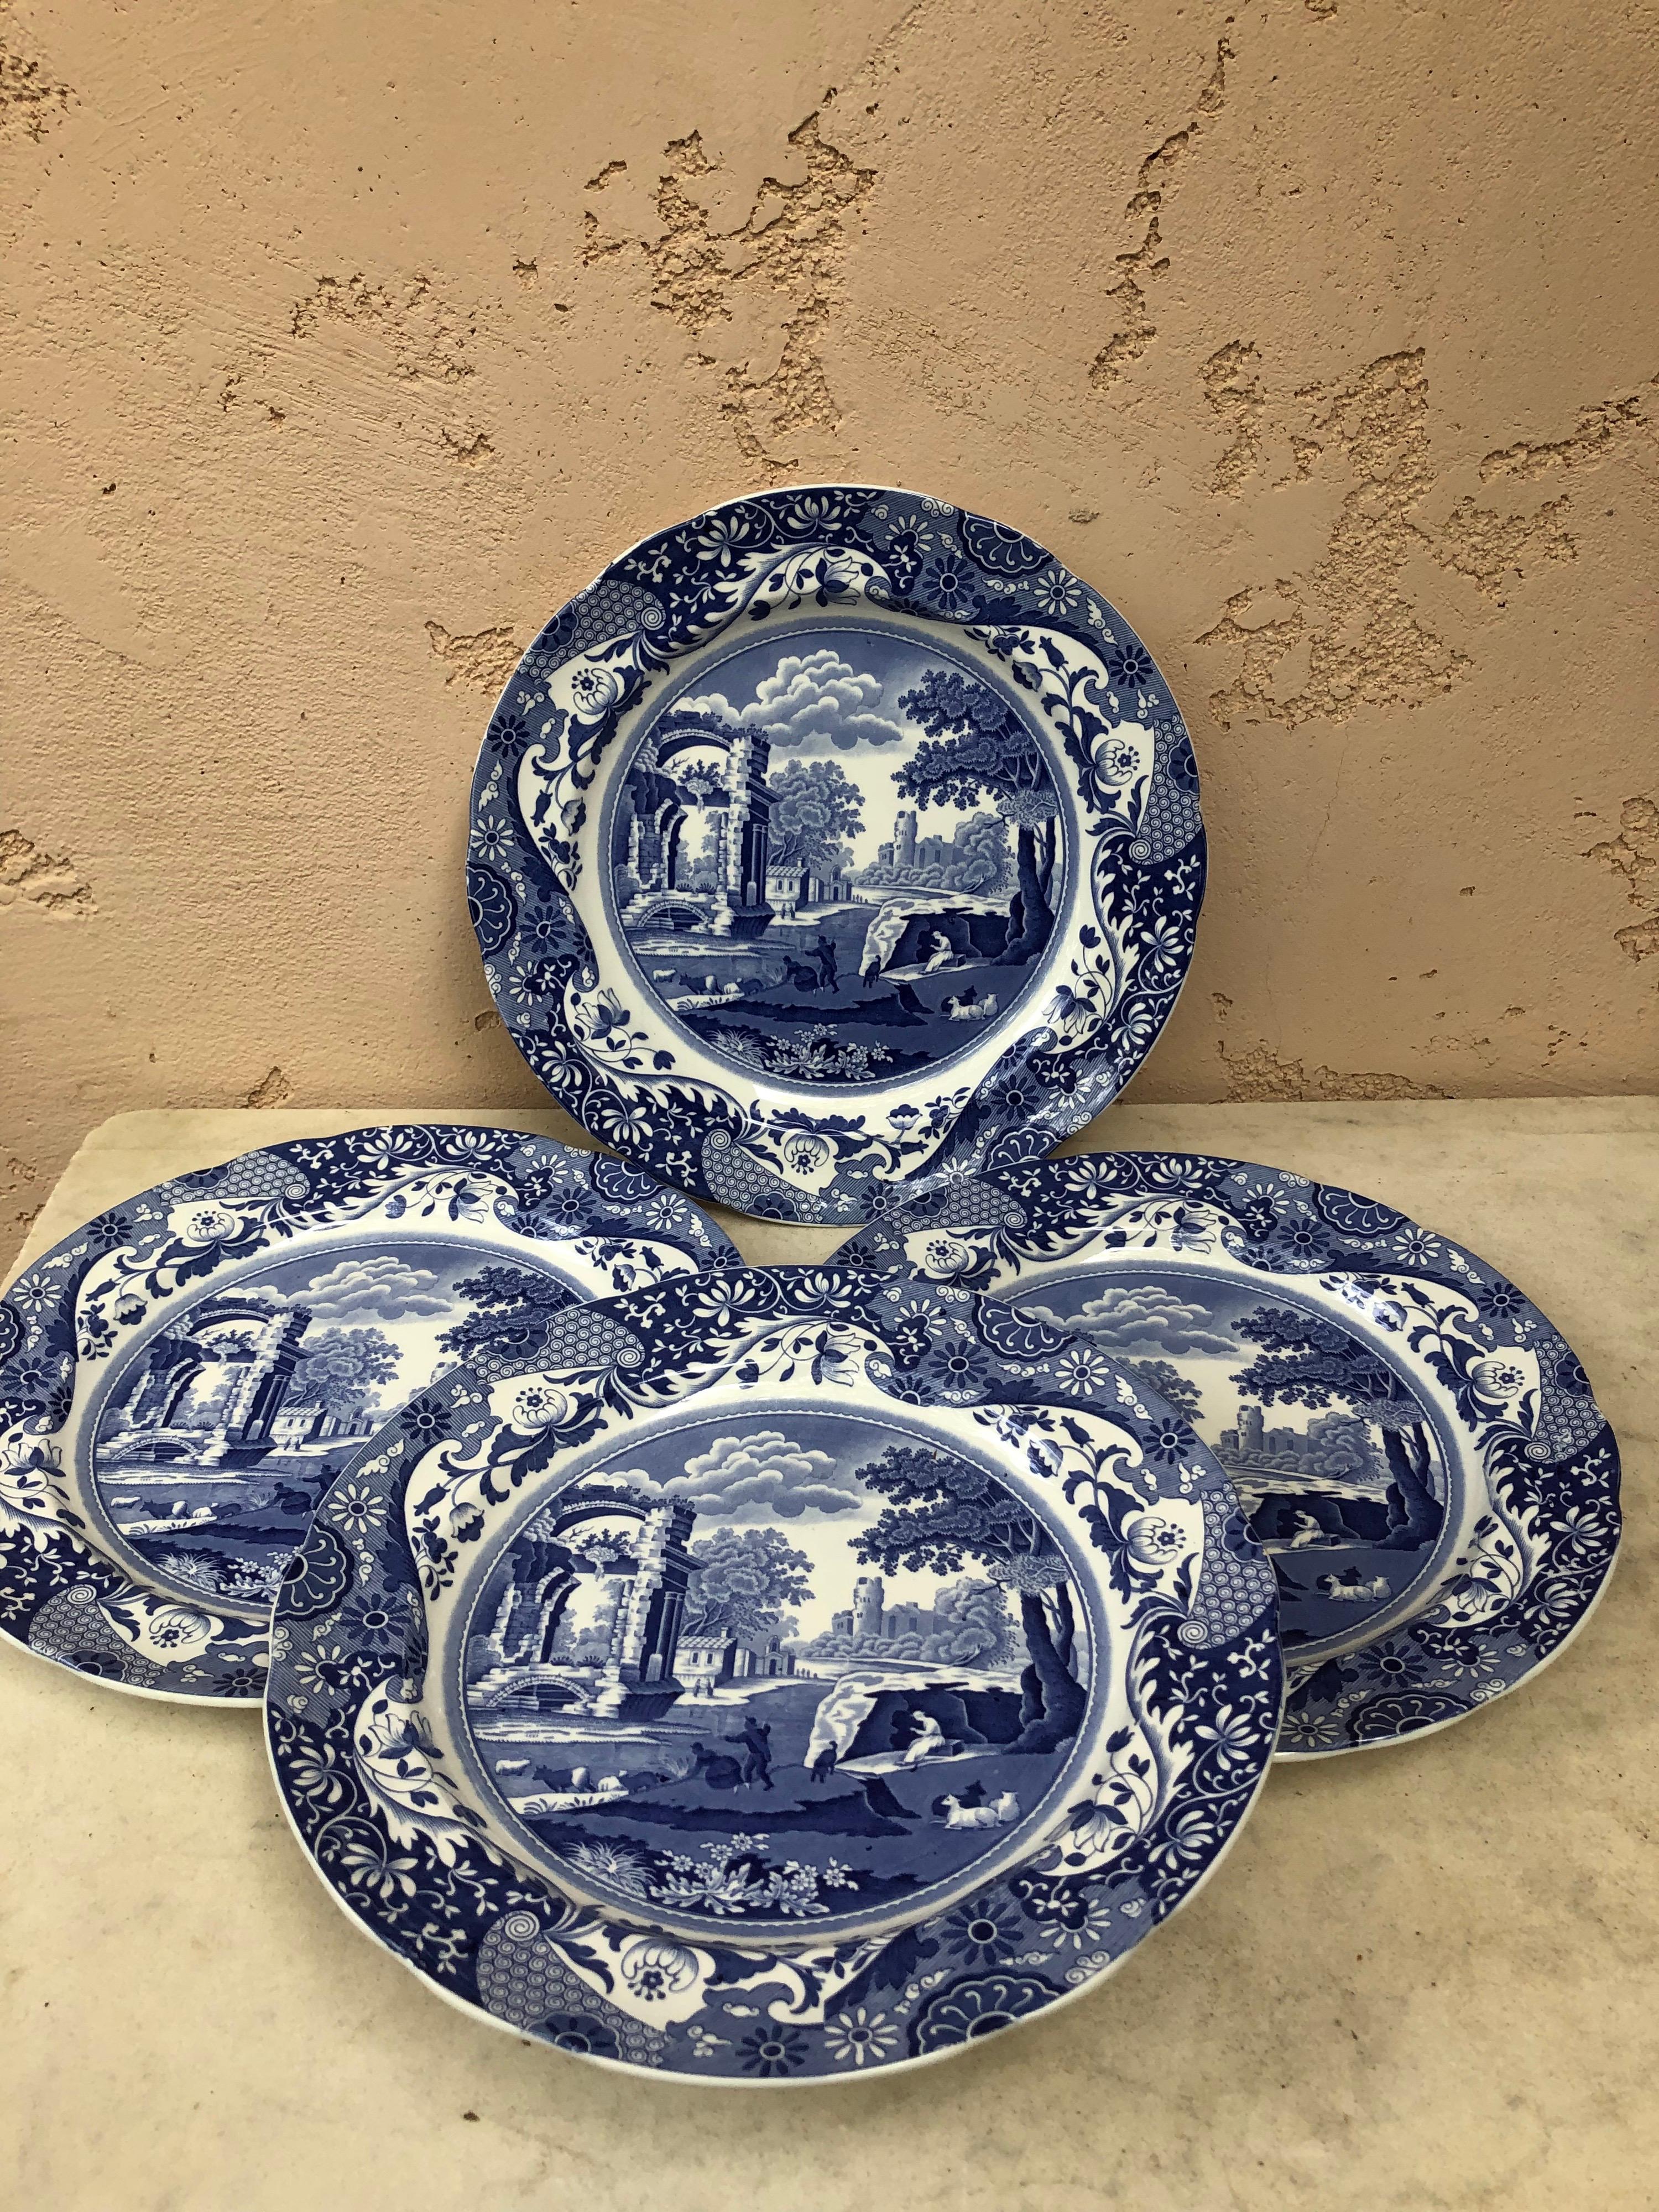 Blue & White Spode Italian dinner plate Copeland circa 1920.
4 plates available.